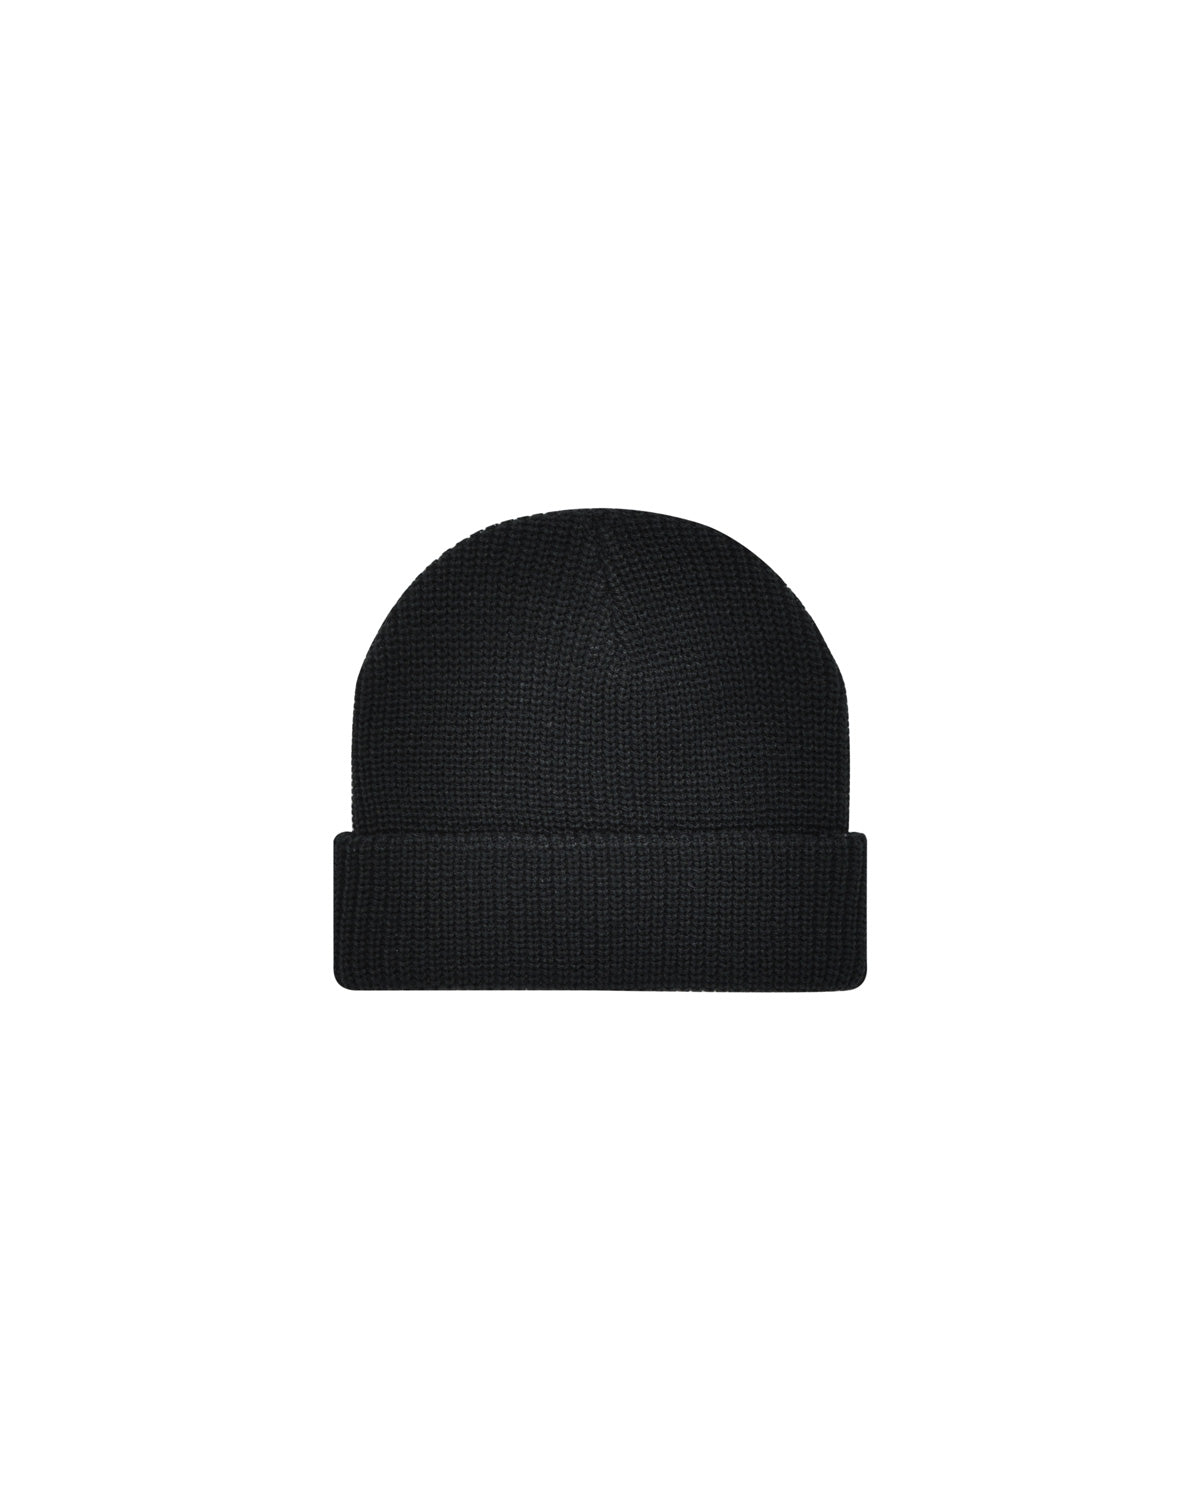 Short black cap with logo patch